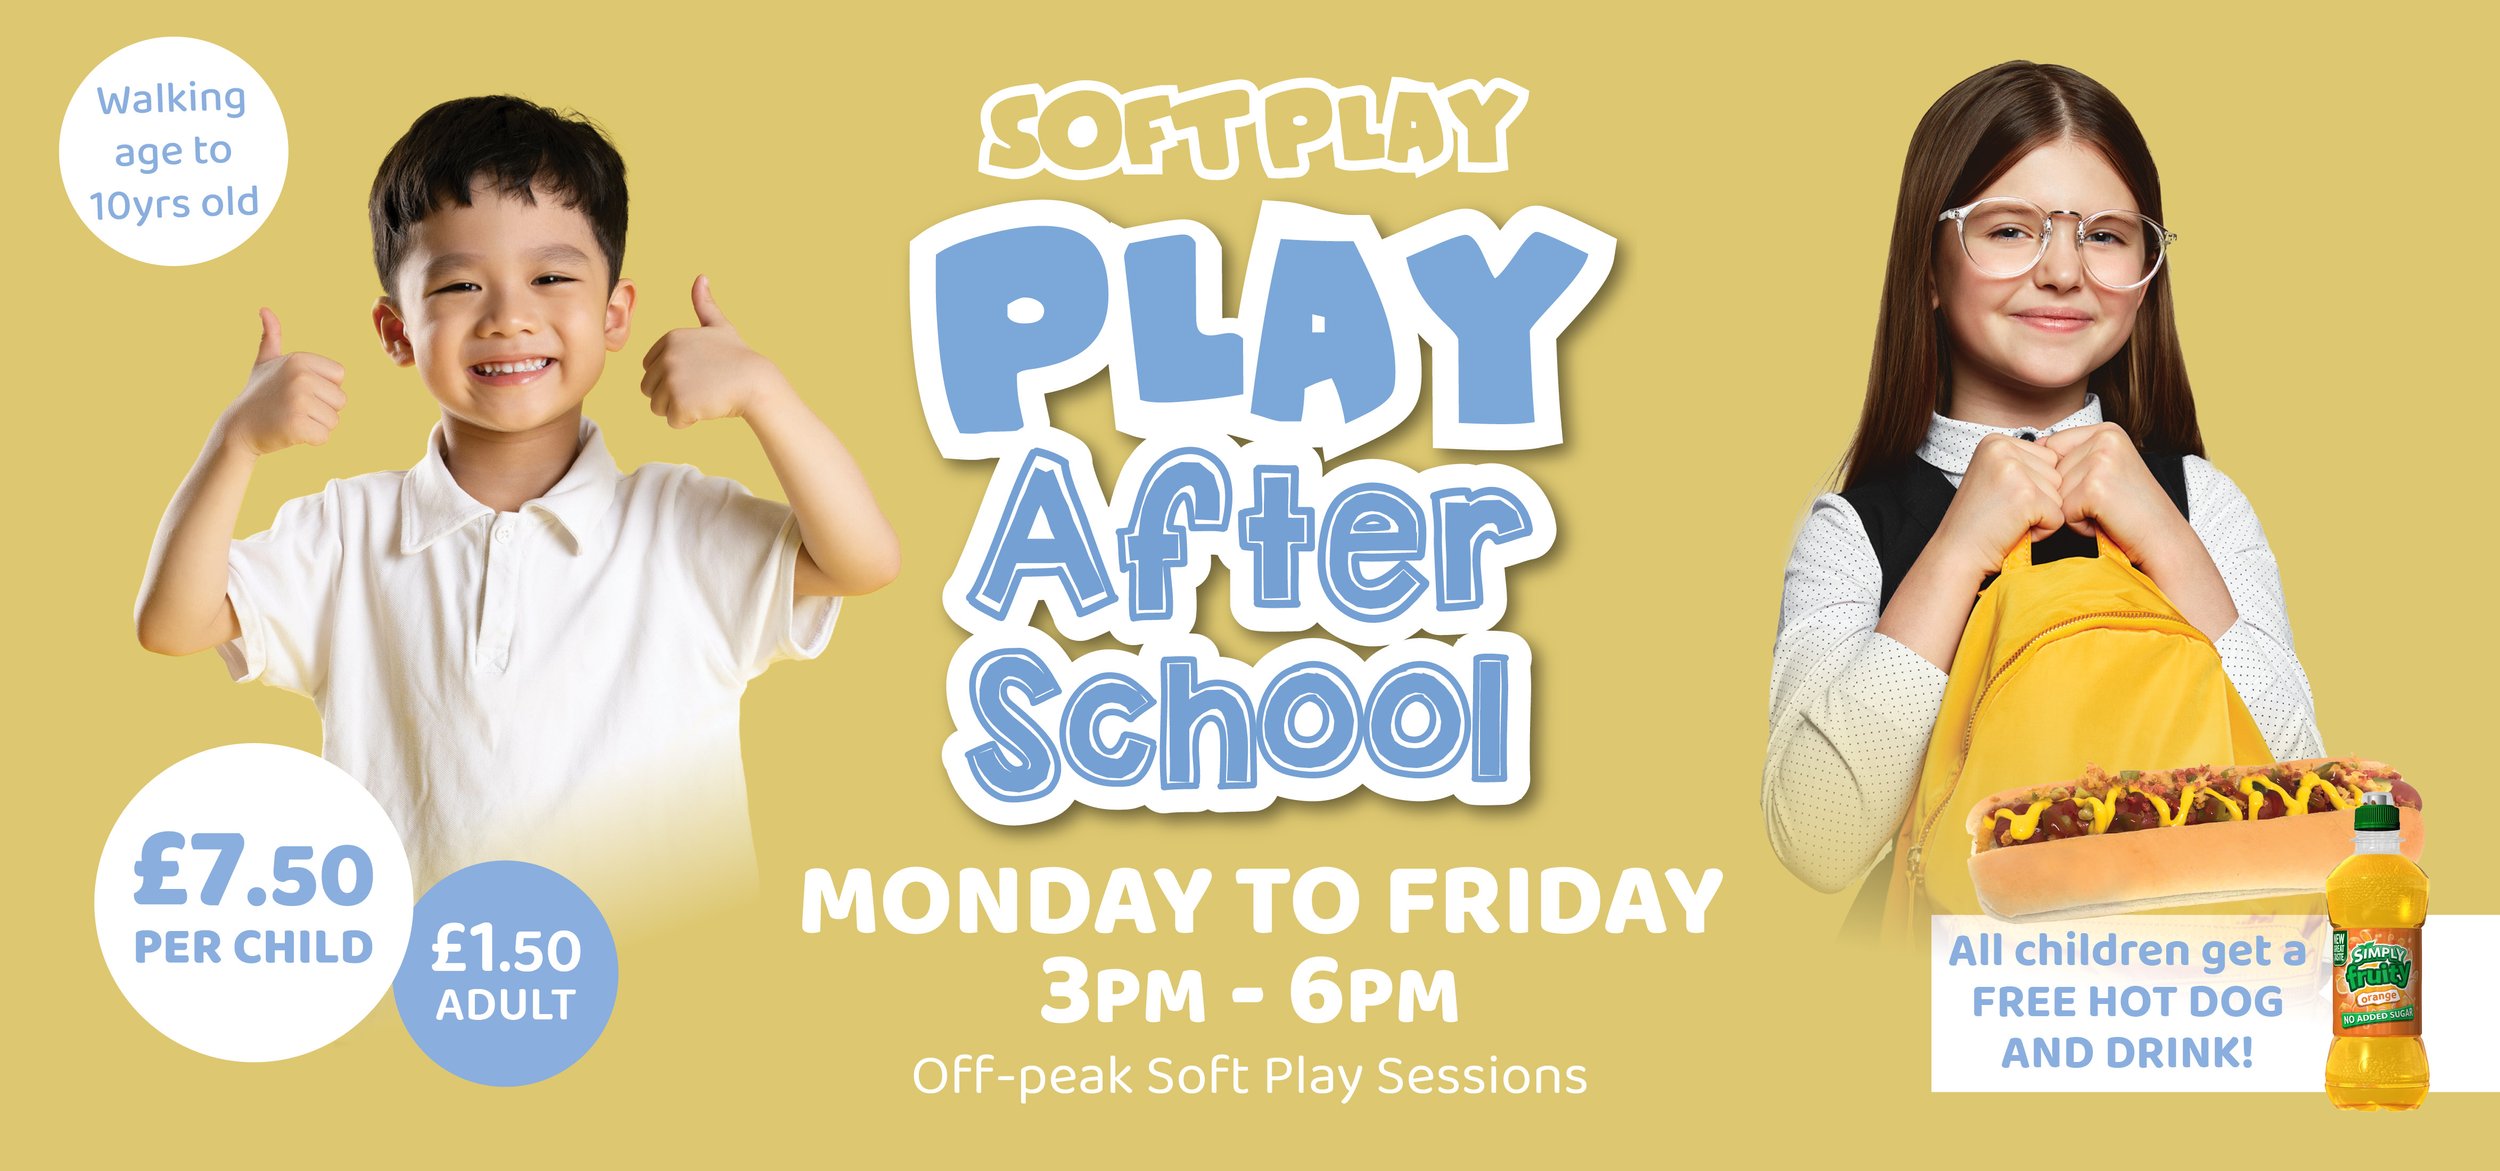 Play After School - Website Banners.jpg